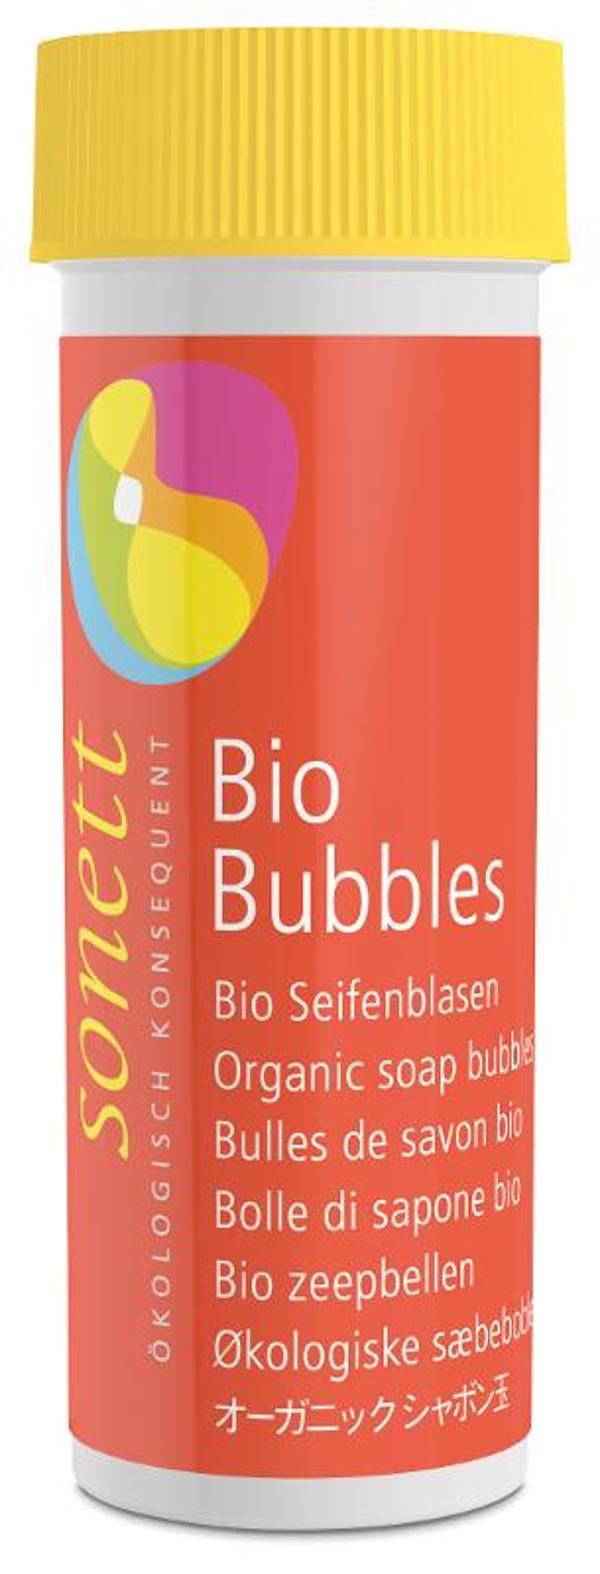 Produktfoto zu Bio Bubbles Seifenblasen 45 ml